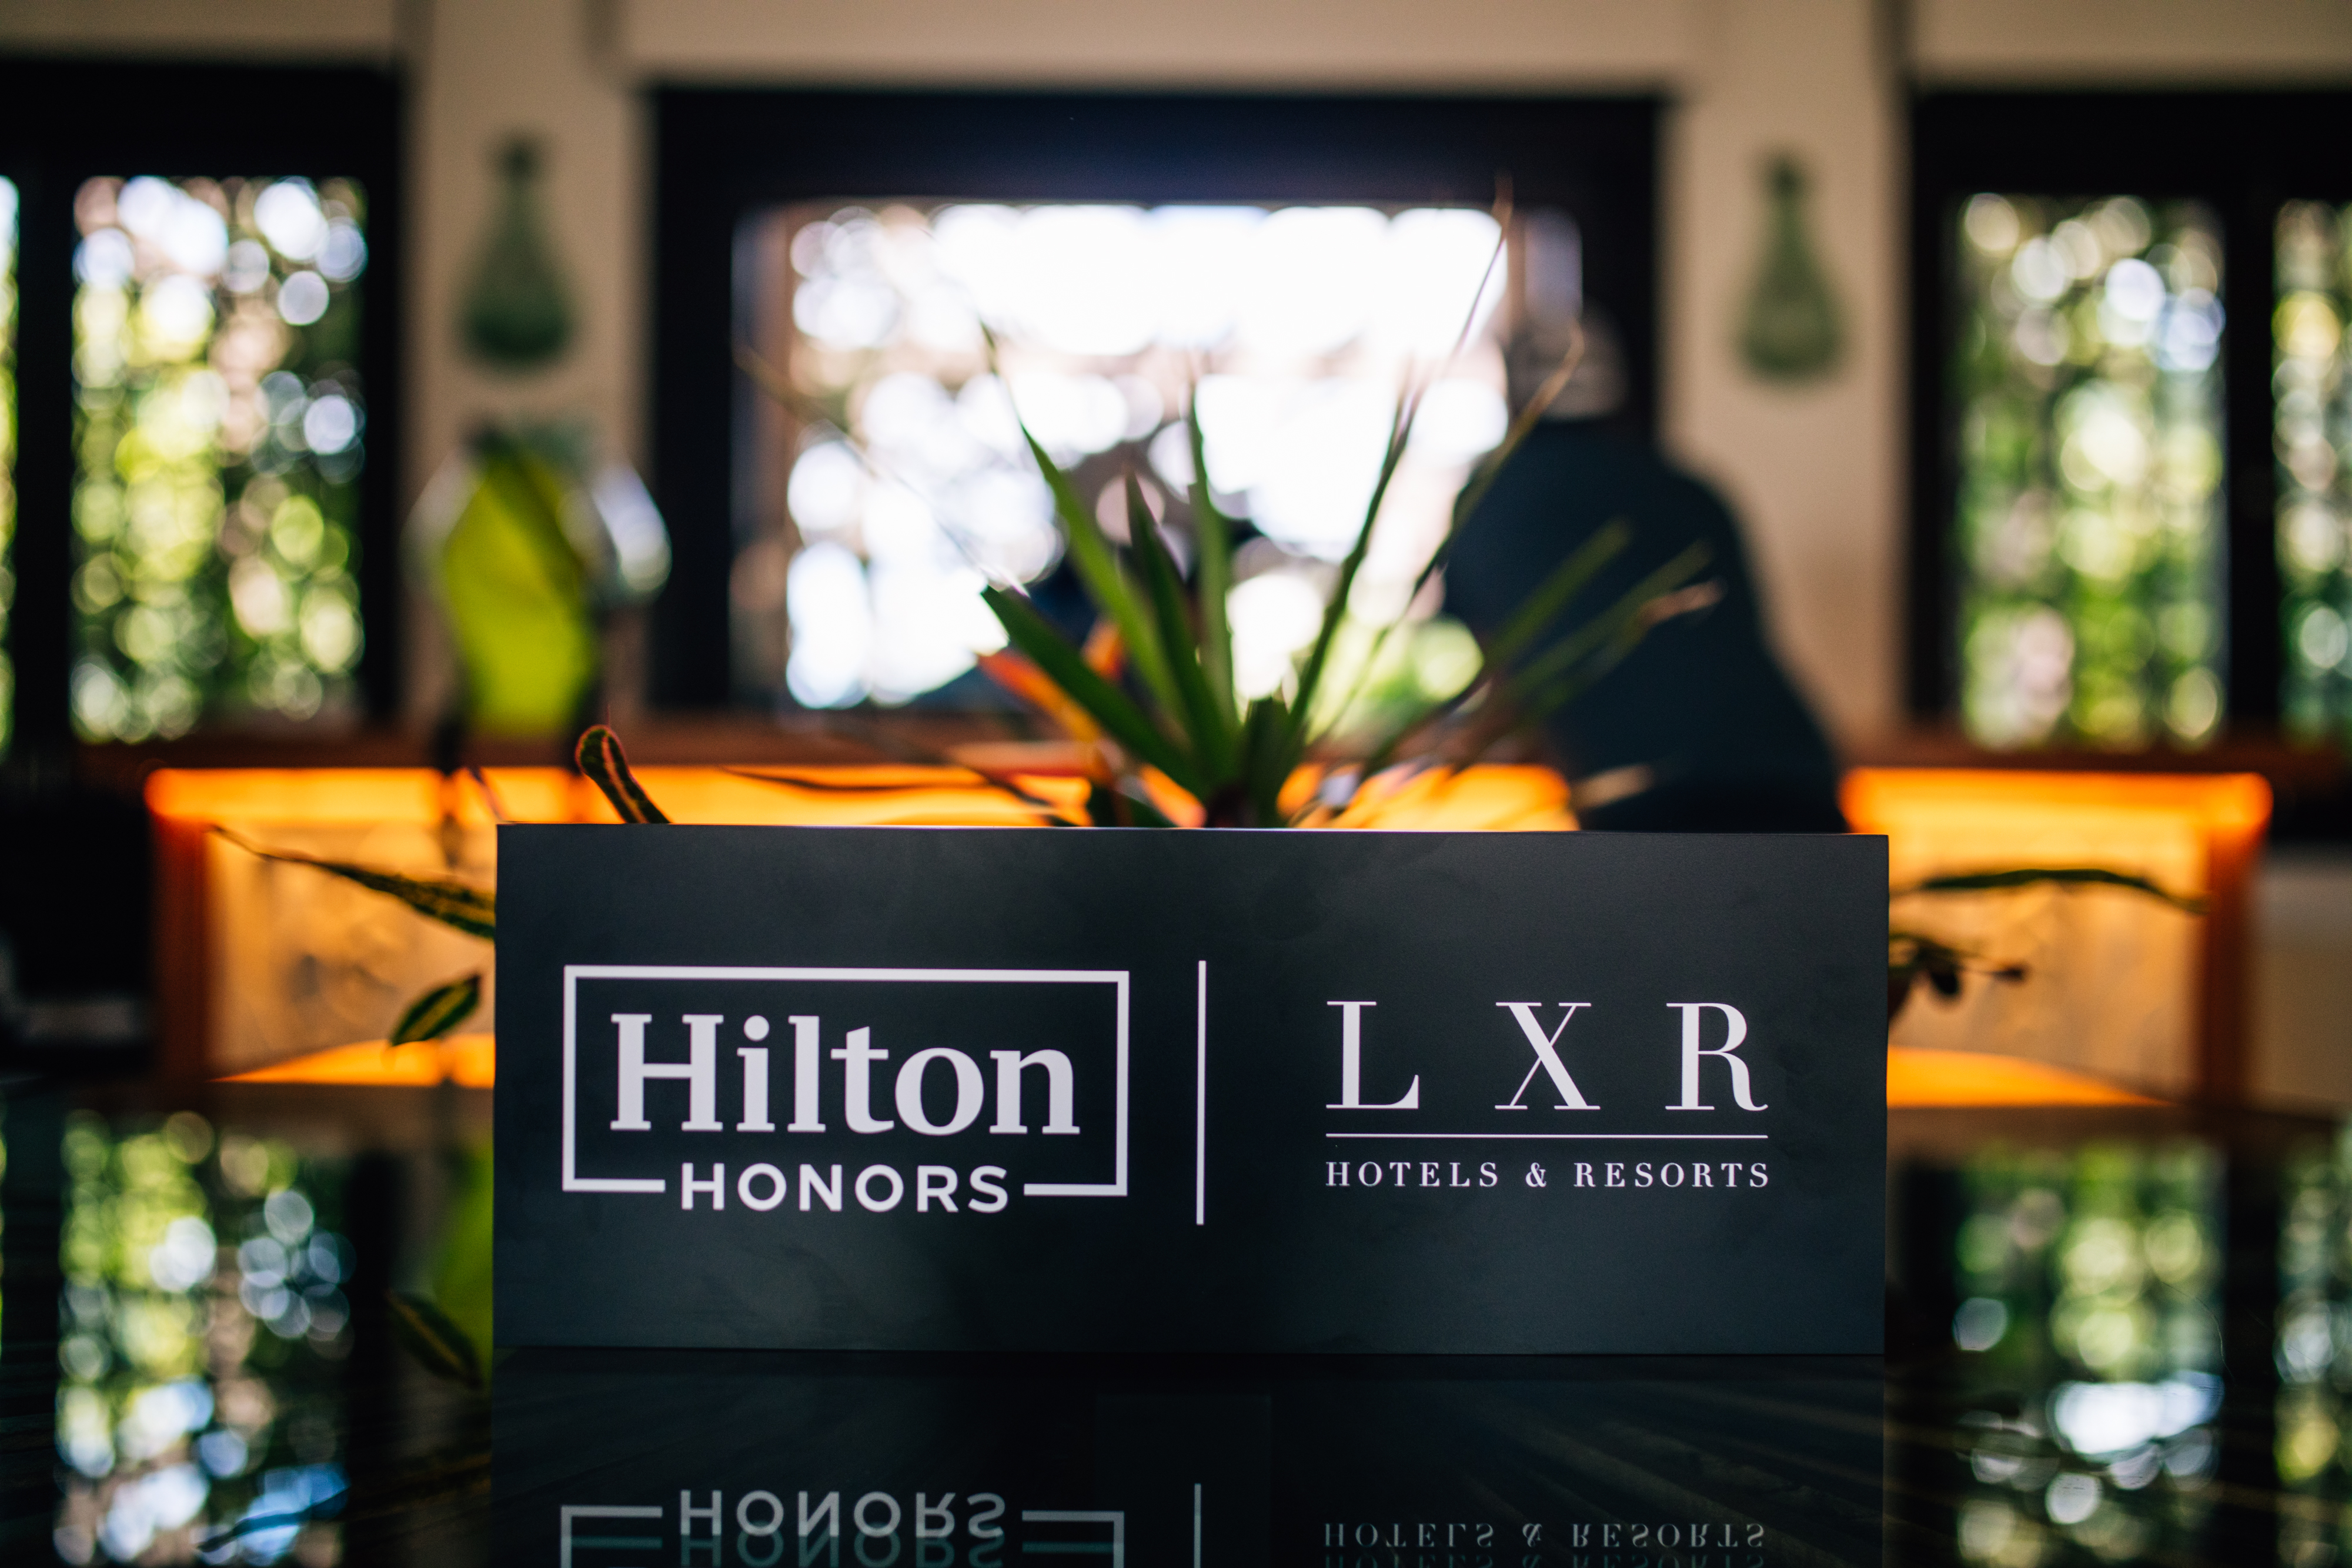 Hilton and LXR black sign